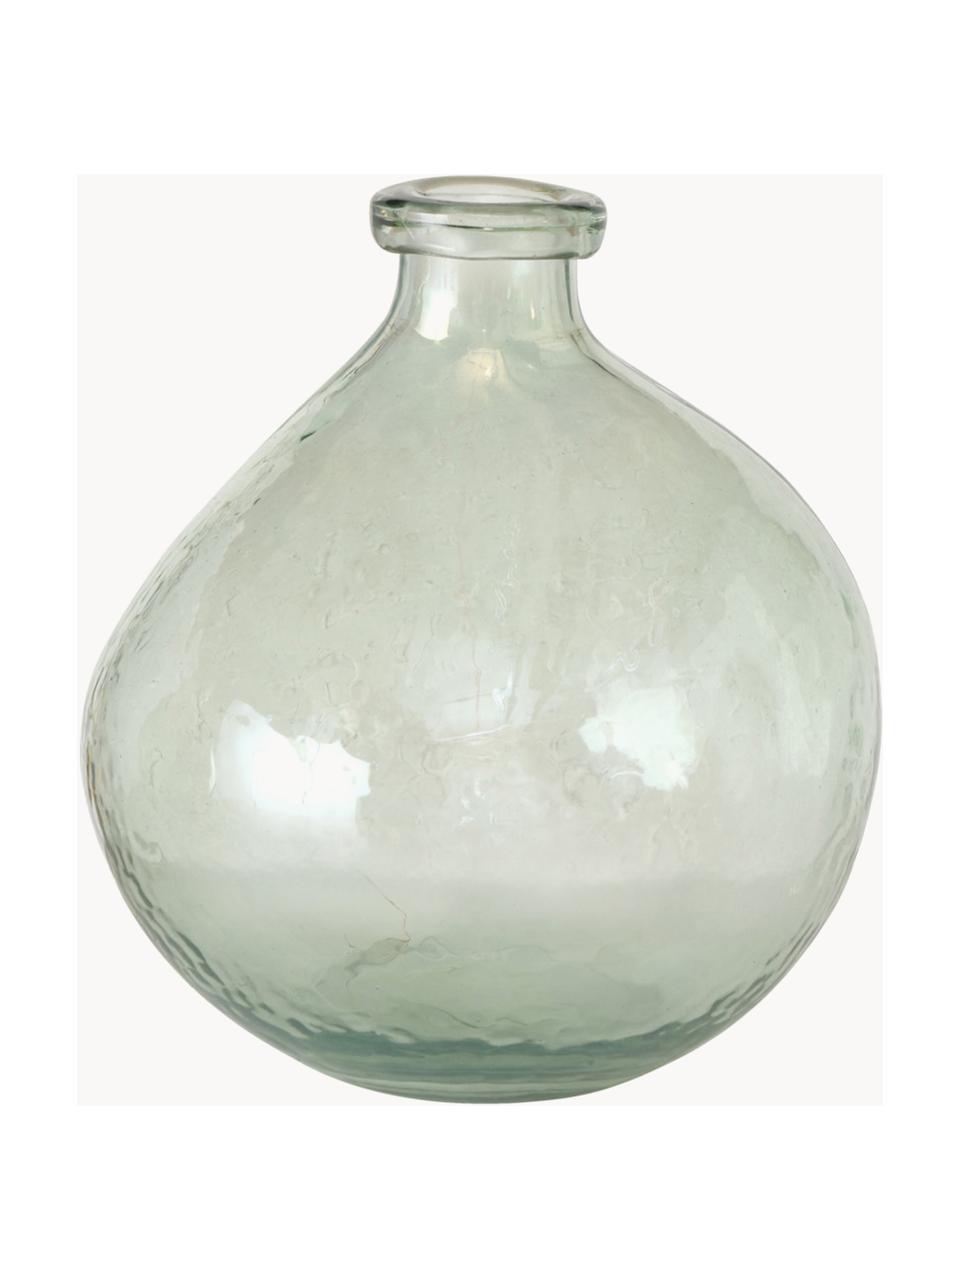 Sada skleněných váz Sligo, 2 díly, Sklo, Odstíny zelené, transparentní, Ø 16 cm, V 18 cm